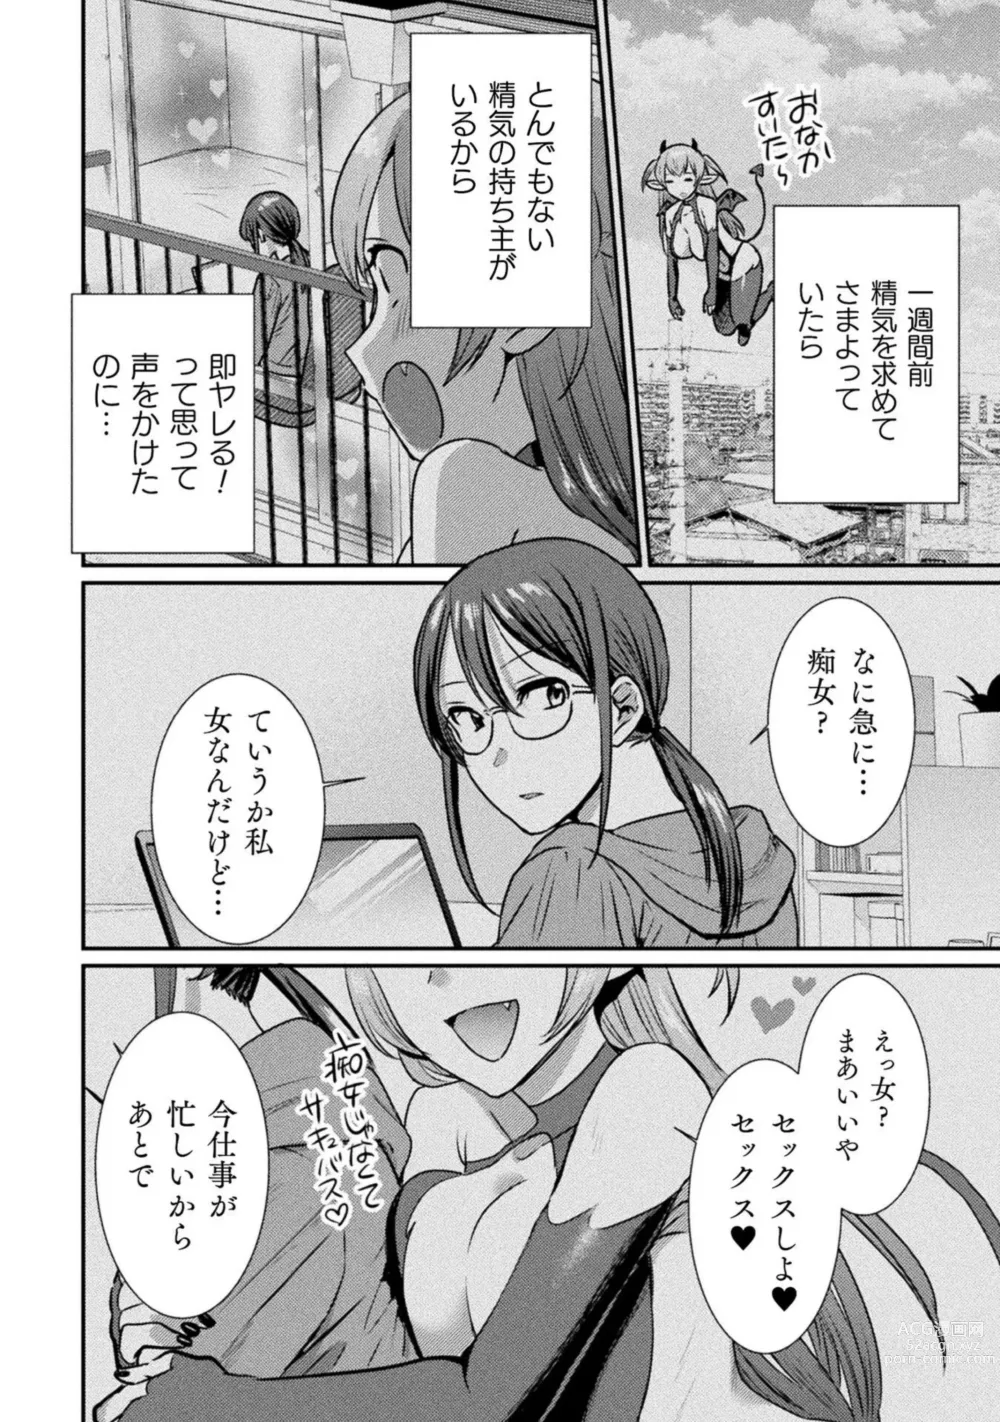 Page 8 of manga Bessatsu Comic Unreal Wakarase Yuri Hen Vol. 2